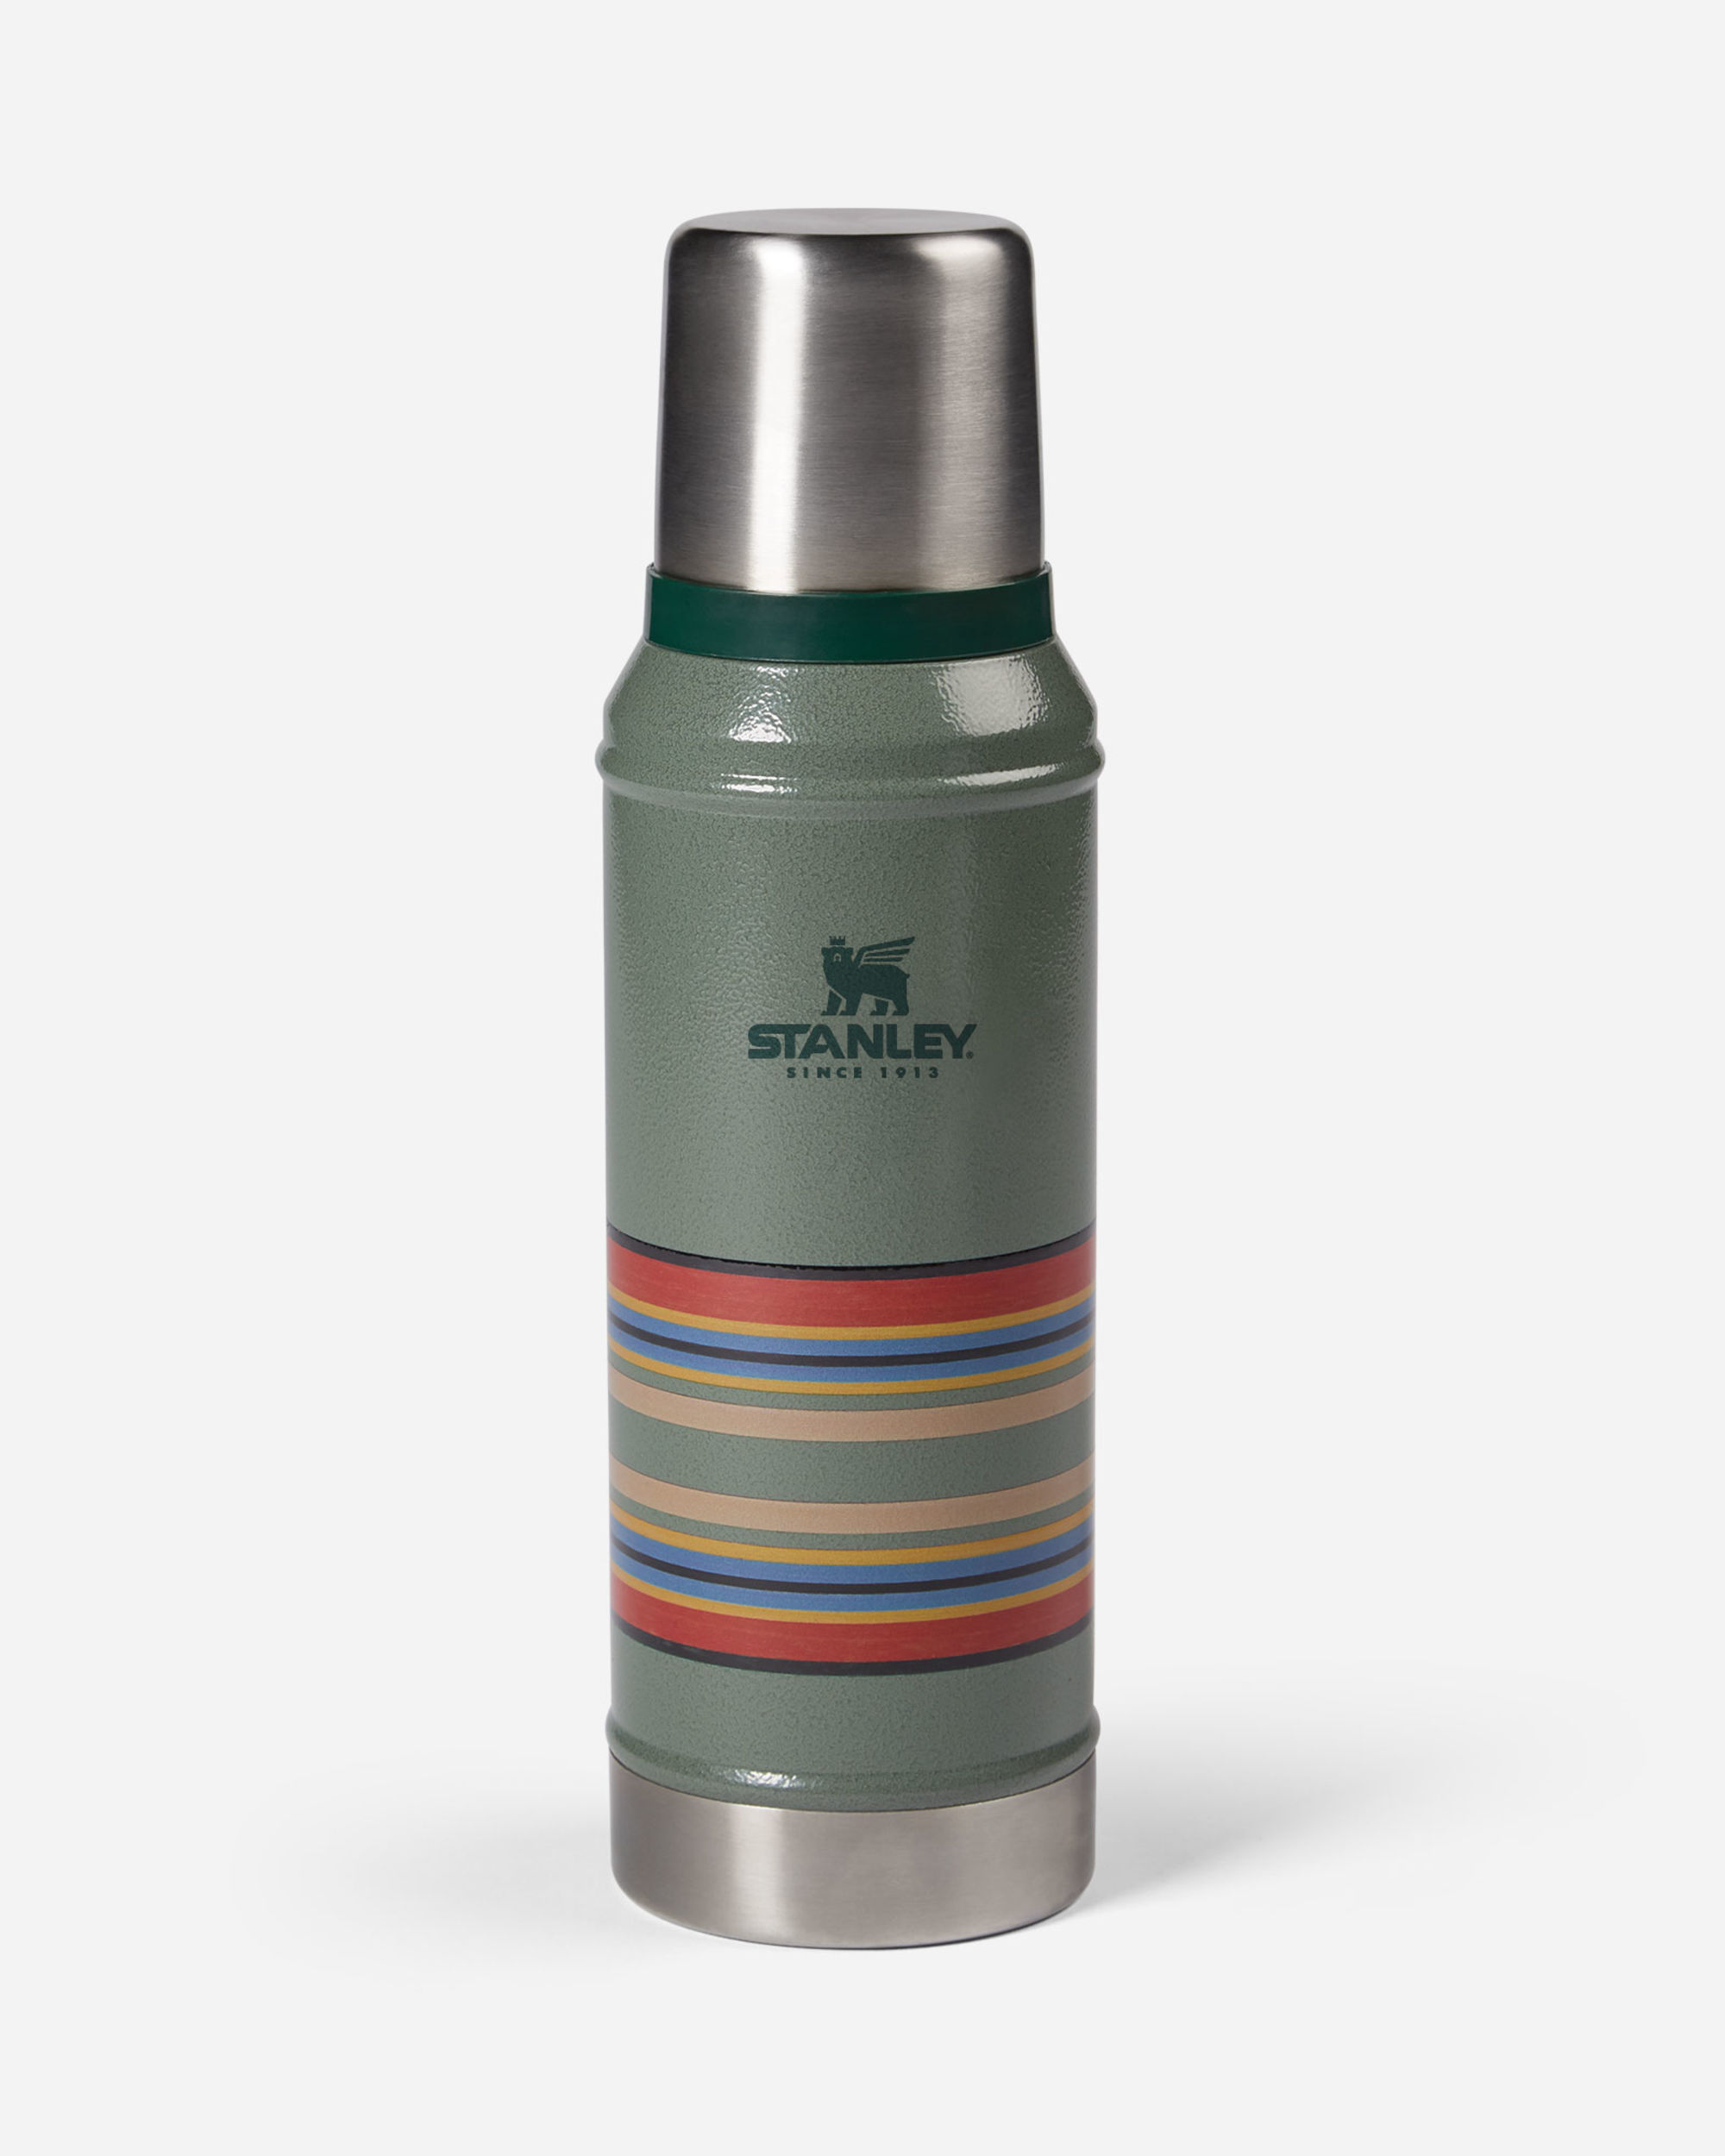 Stanley Classic Vacuum Bottle Review